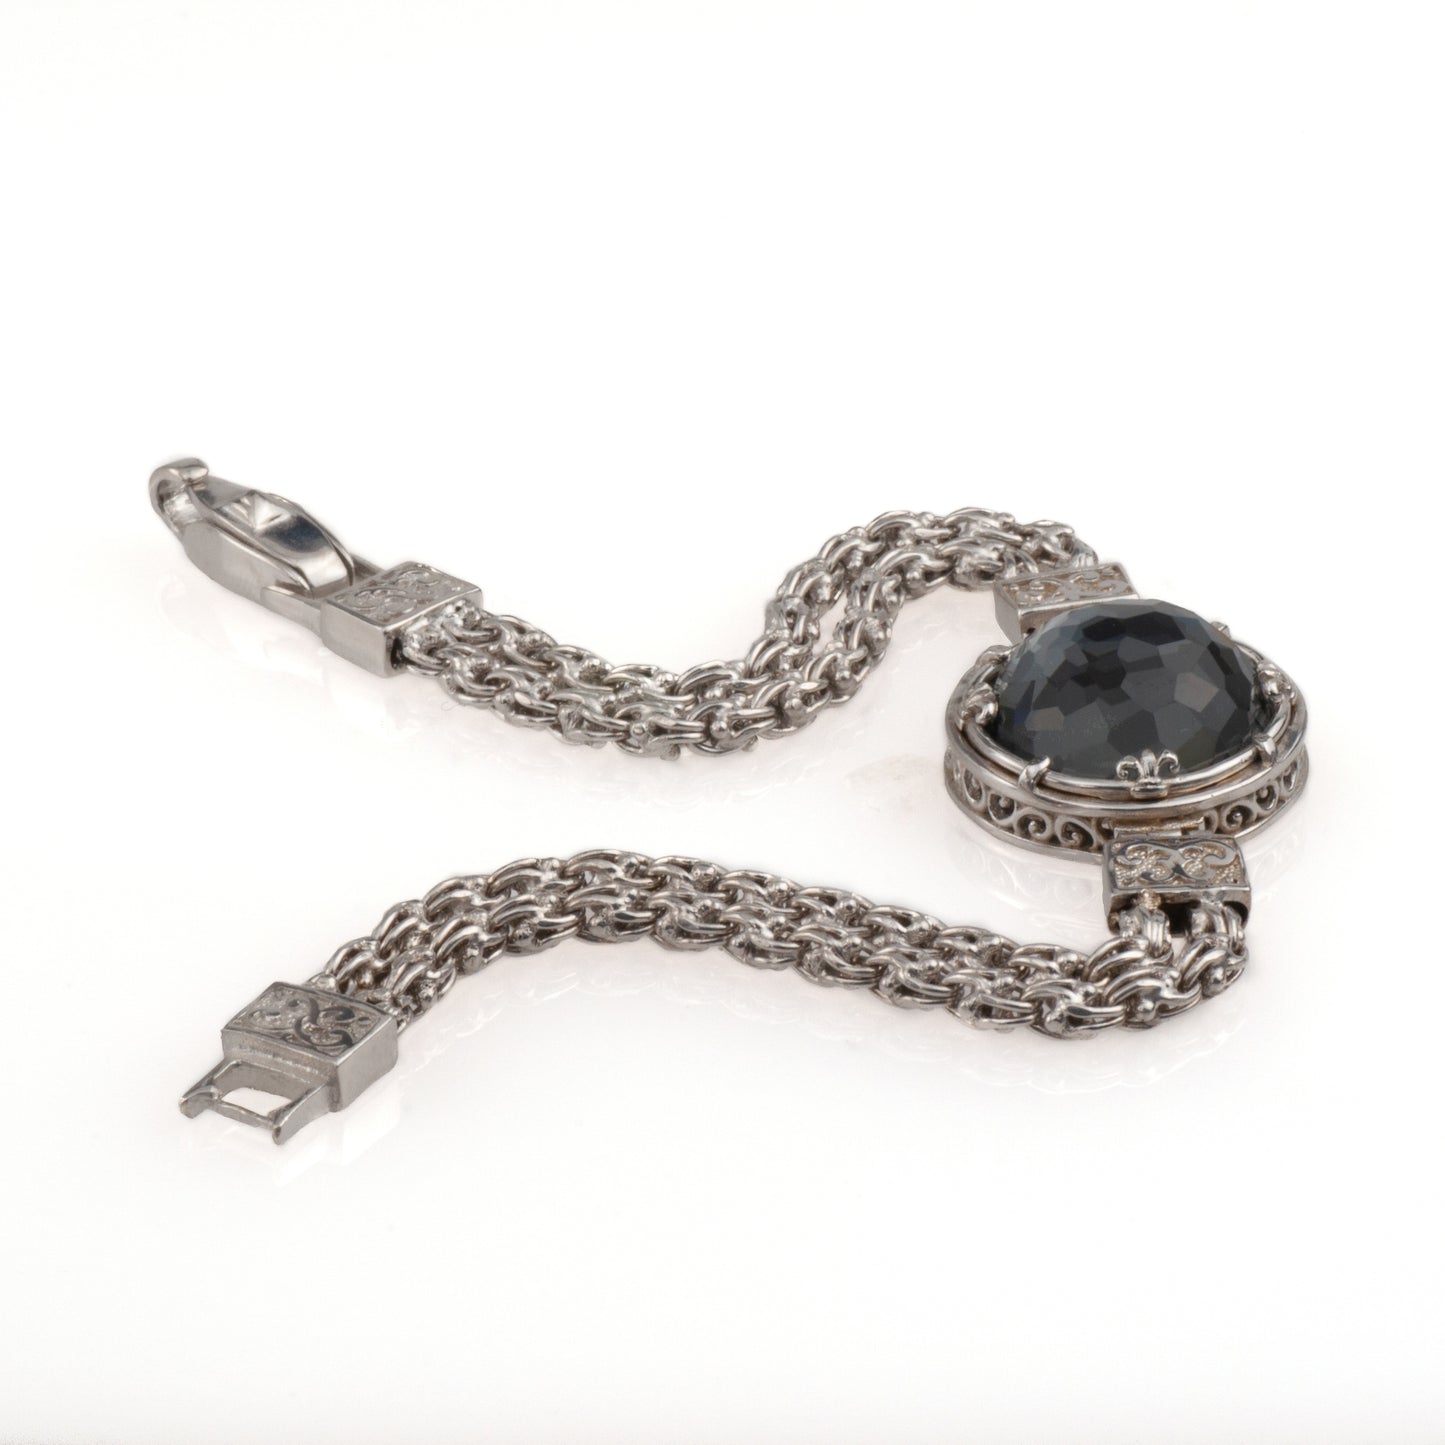 Anatoli Collection Hematite Bracelet